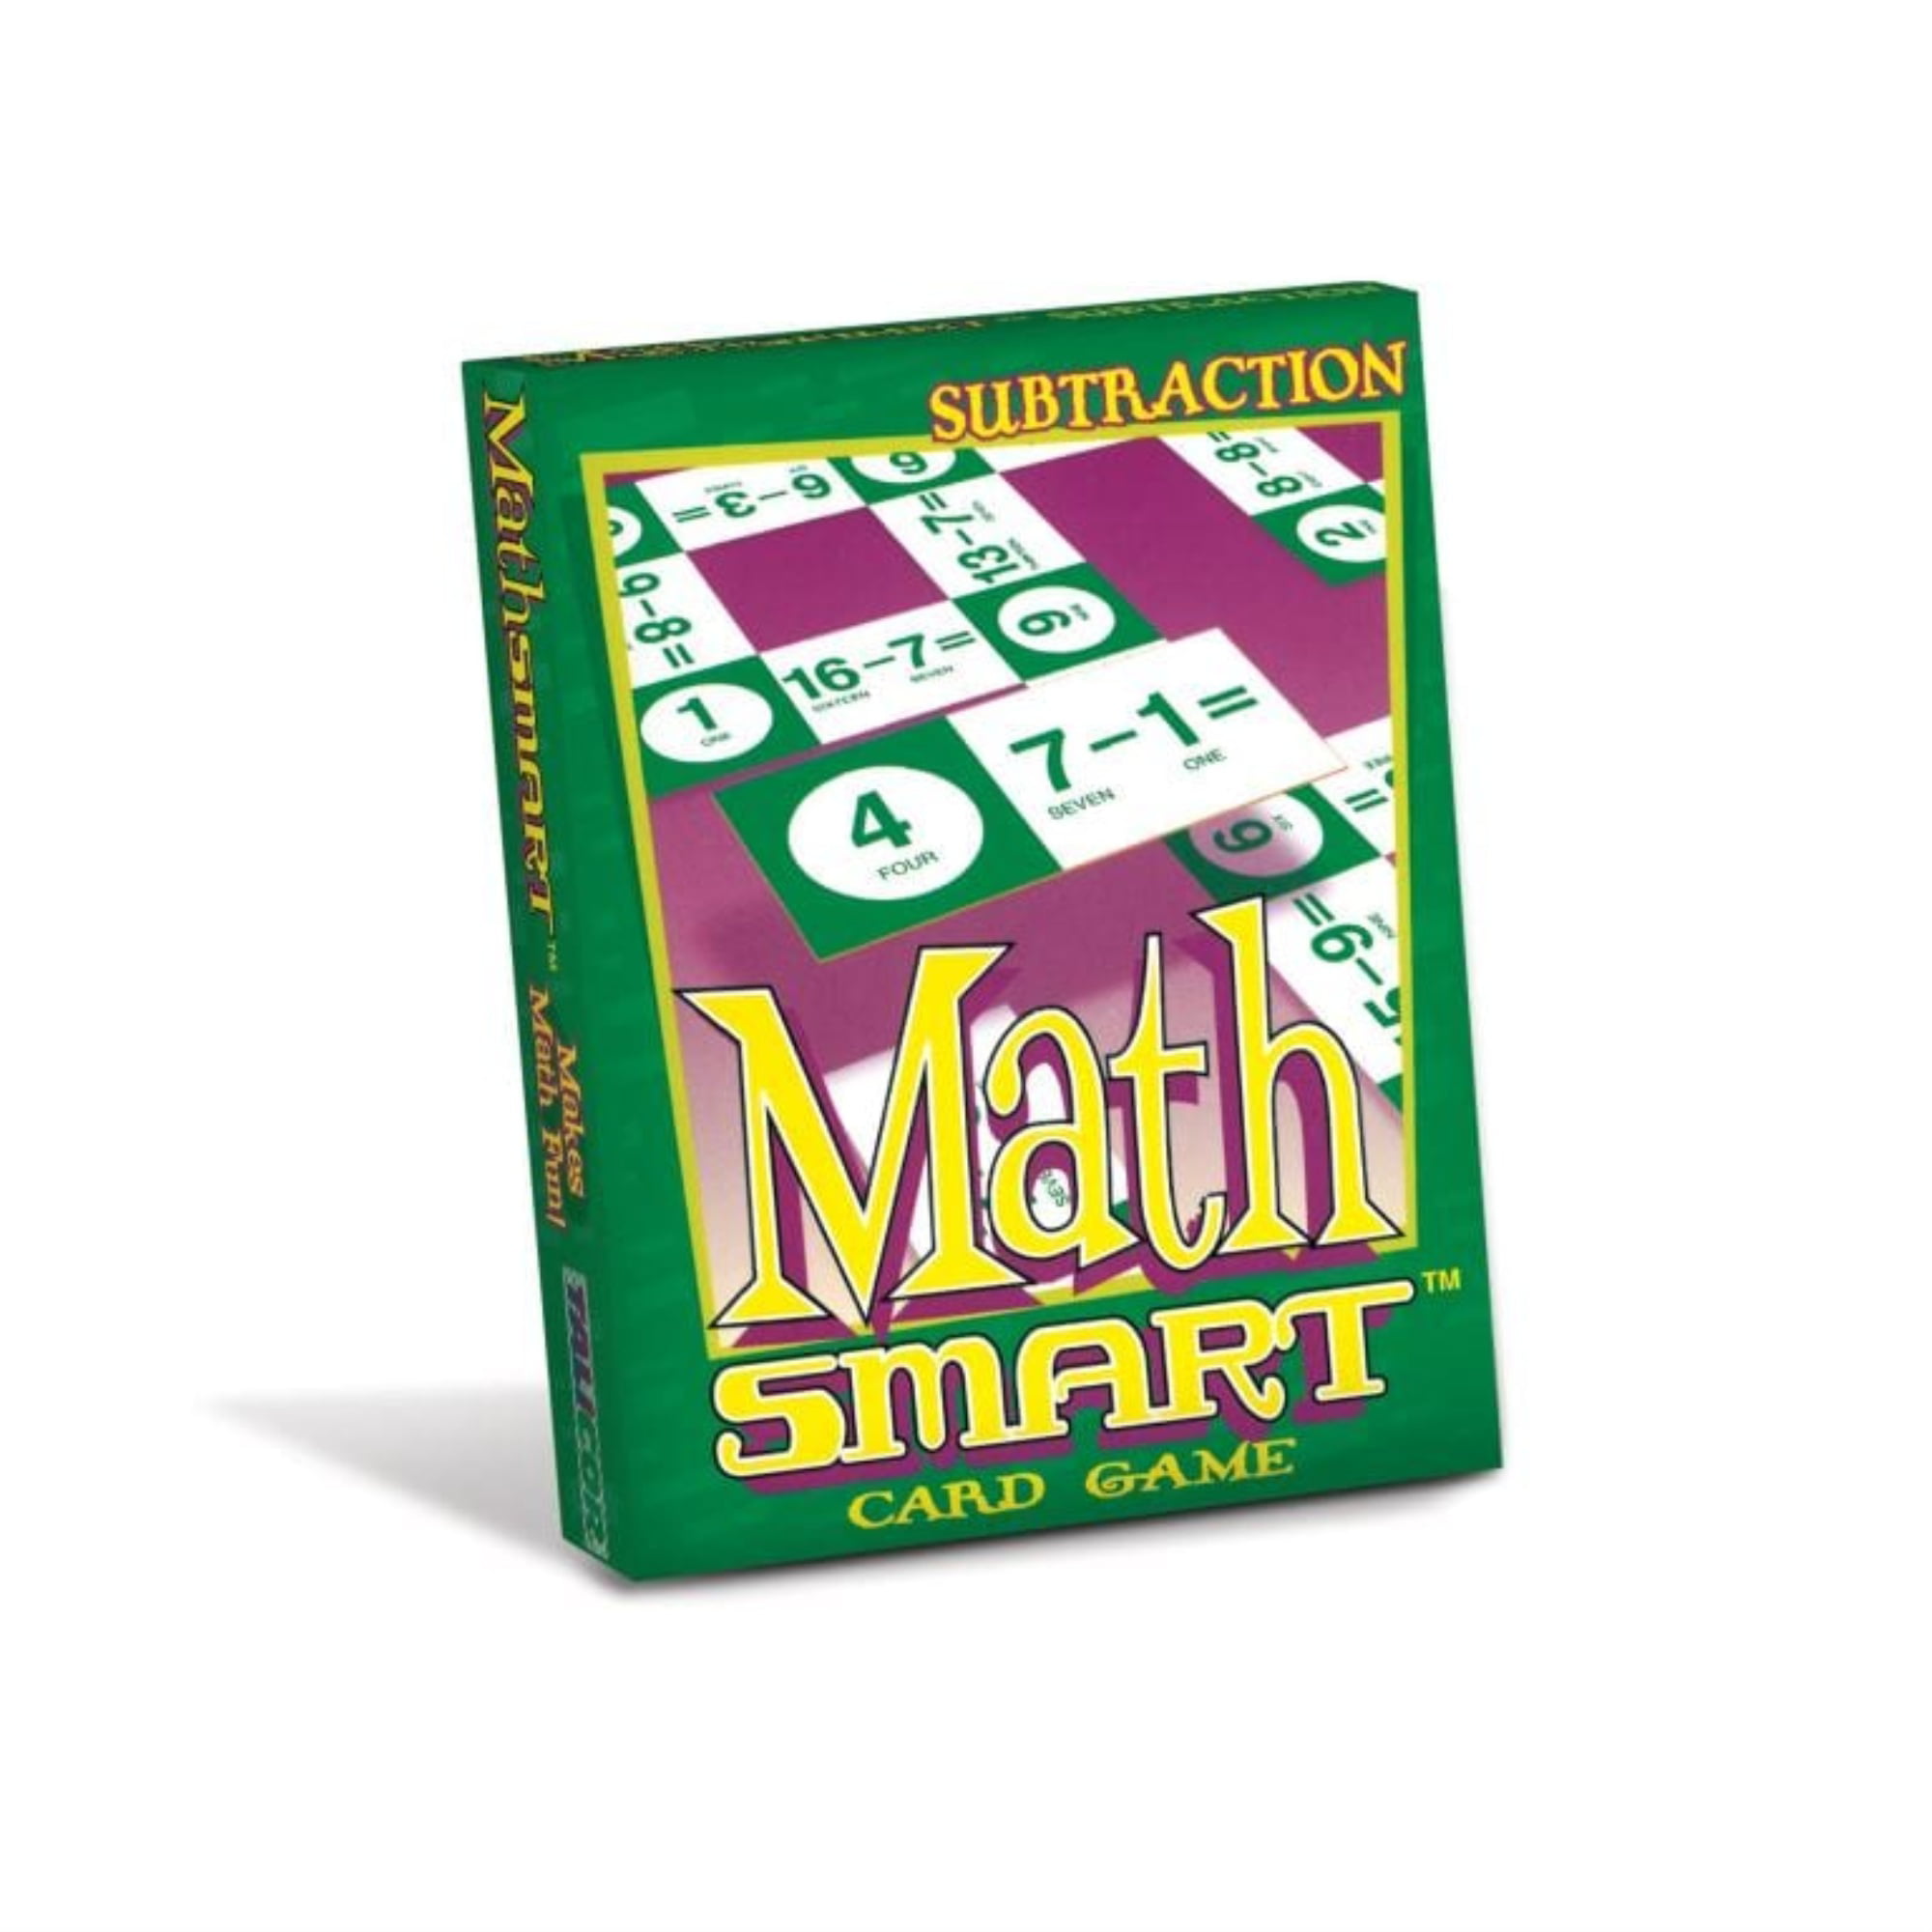 Math Smart Card Game, Subtraction - Walmart.com